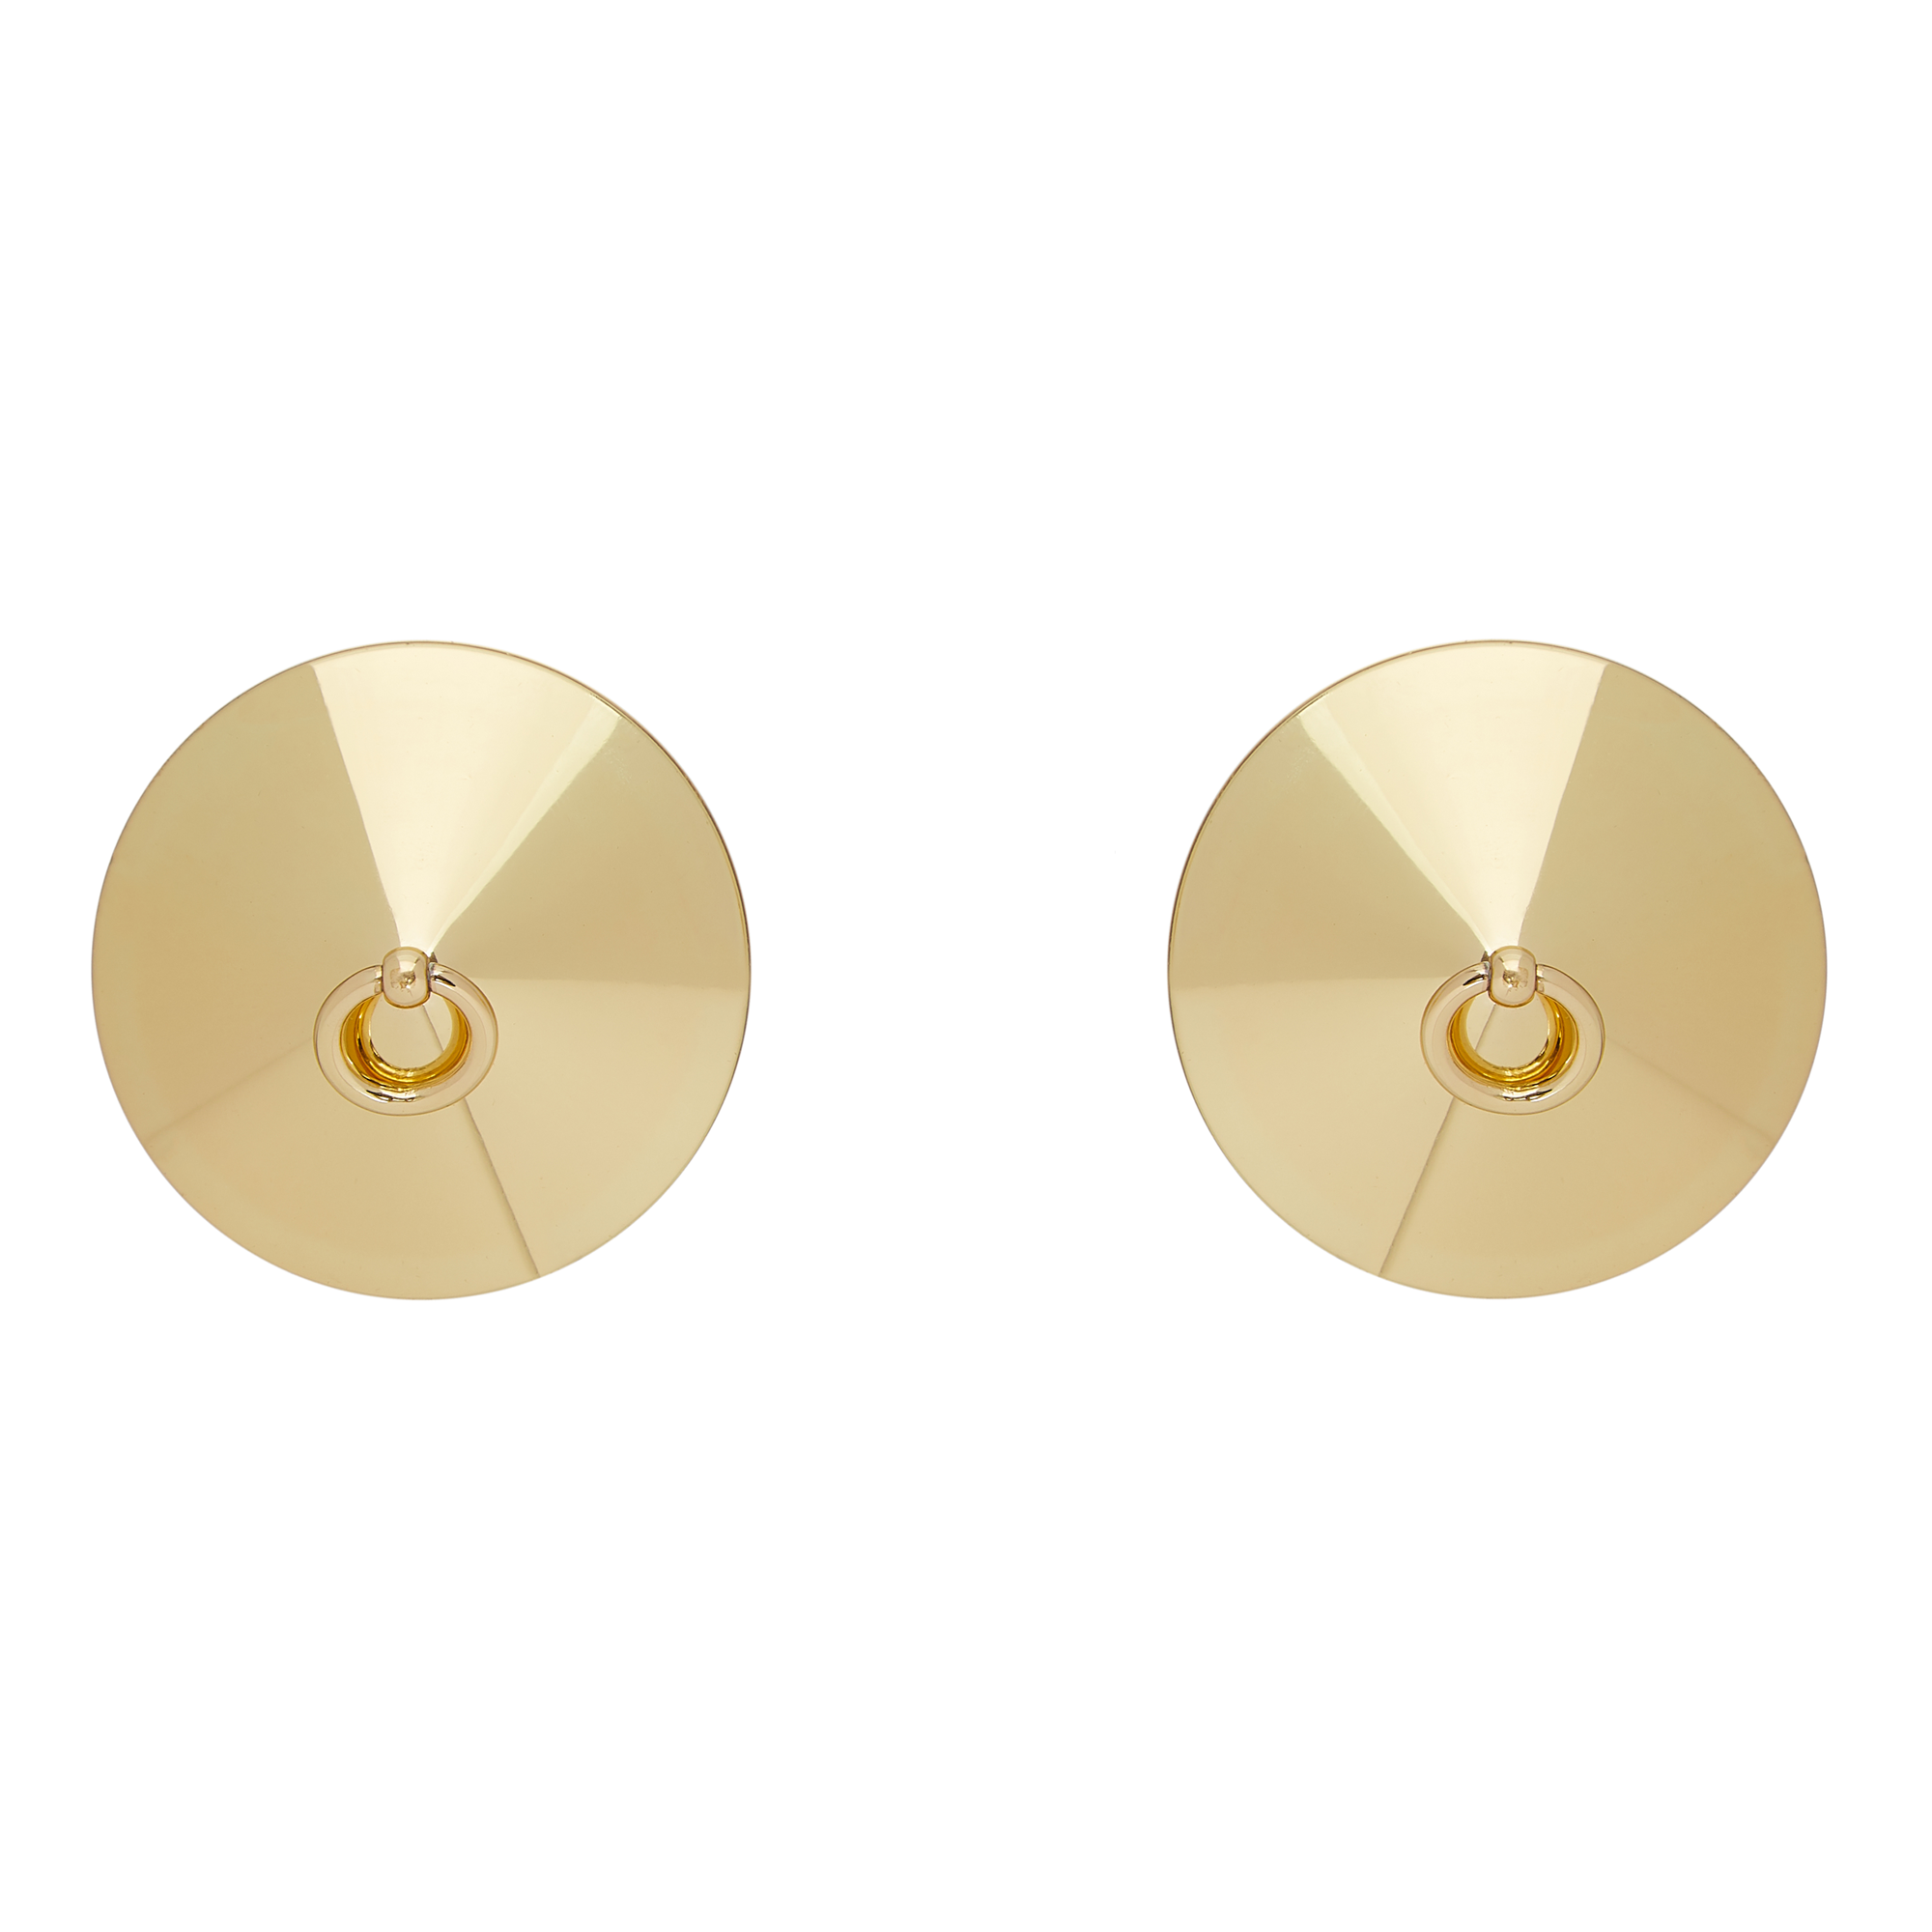 Bordelle 24K Gold plated O ring nipplets